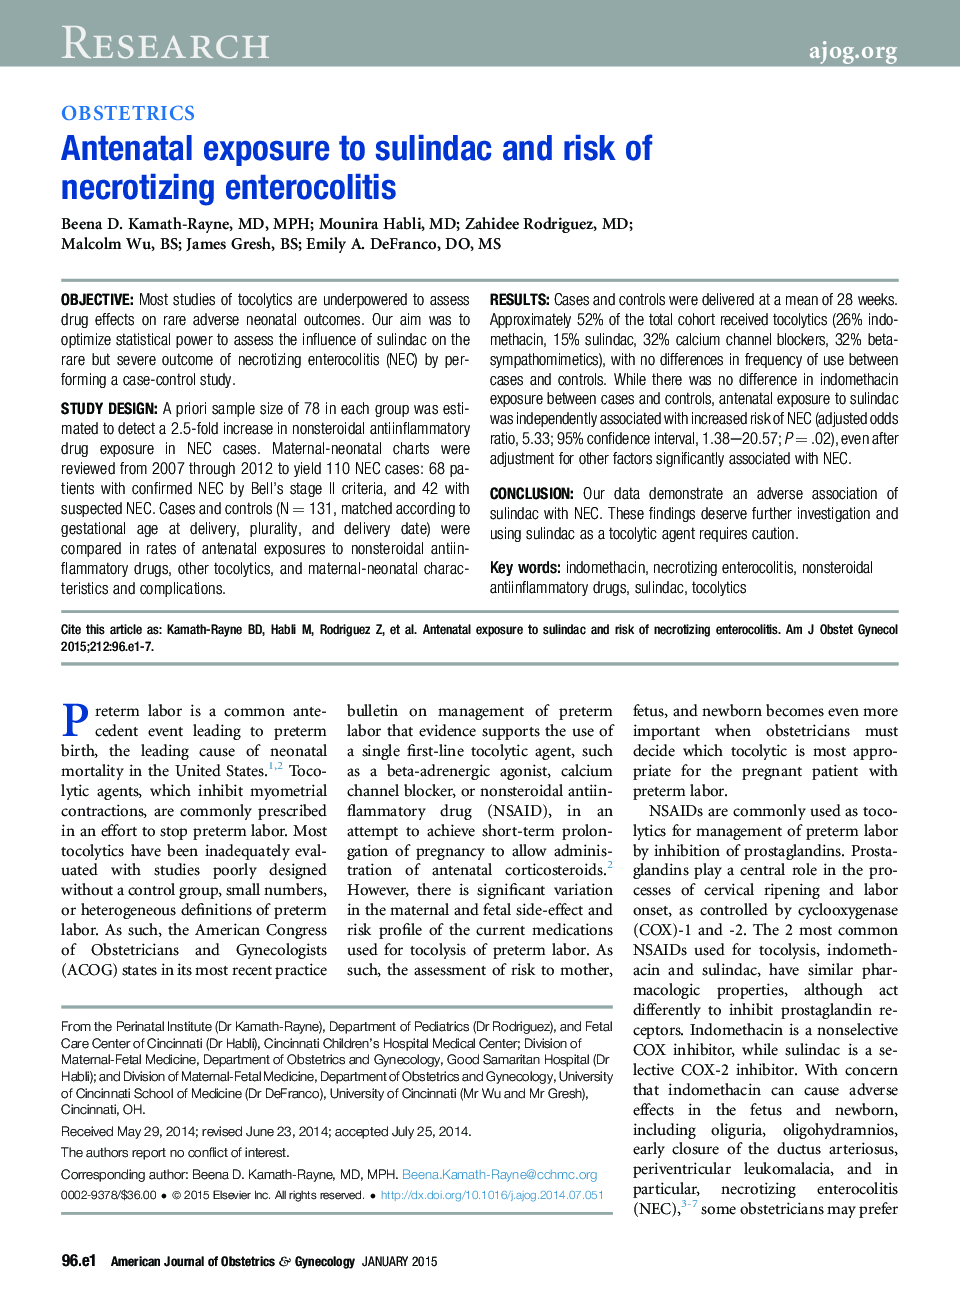 Antenatal exposure to sulindac and risk of necrotizing enterocolitis